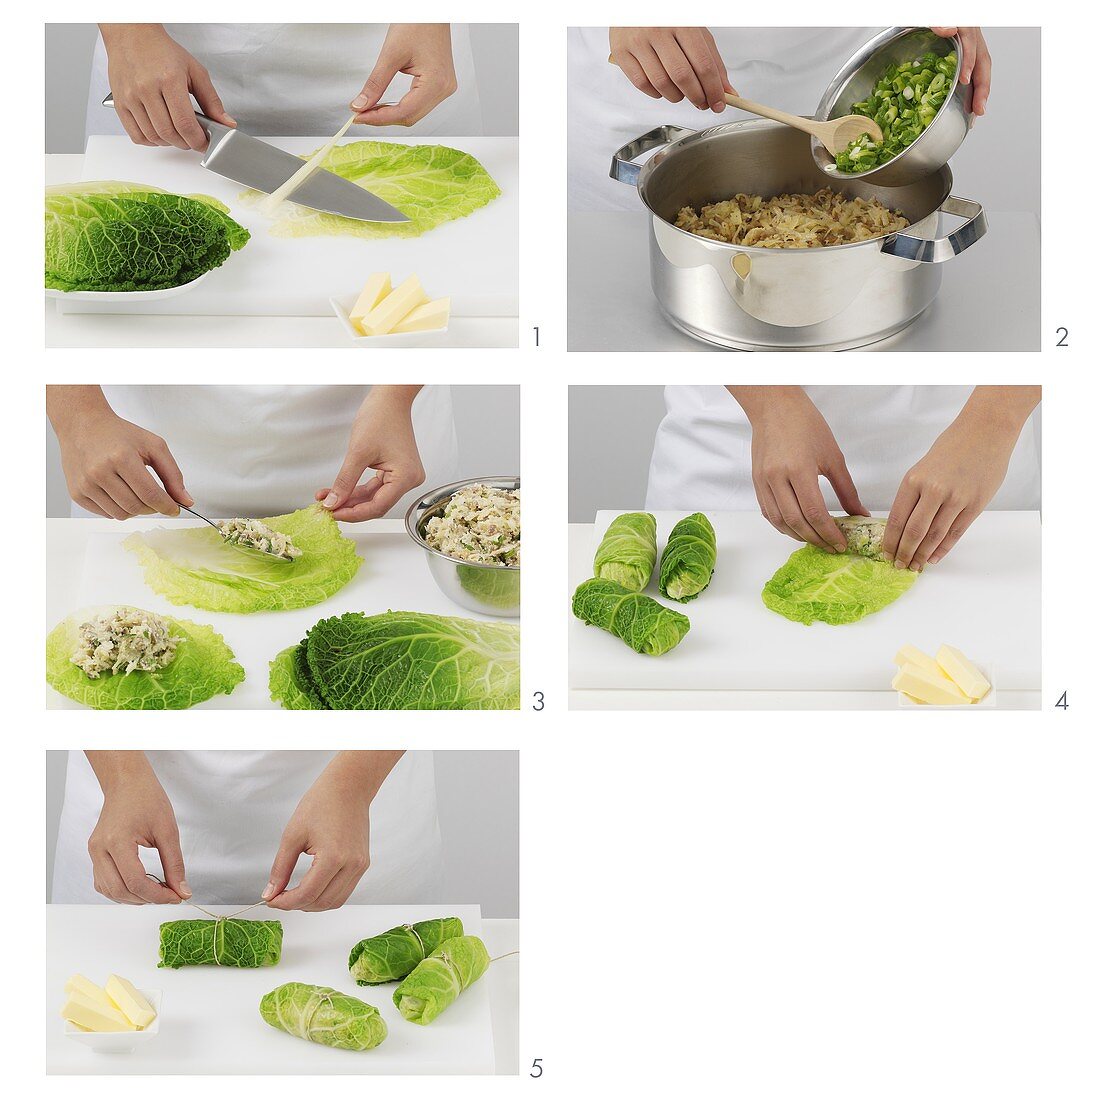 Preparing stuffed savoy cabbage leaves with vegetarian stuffing